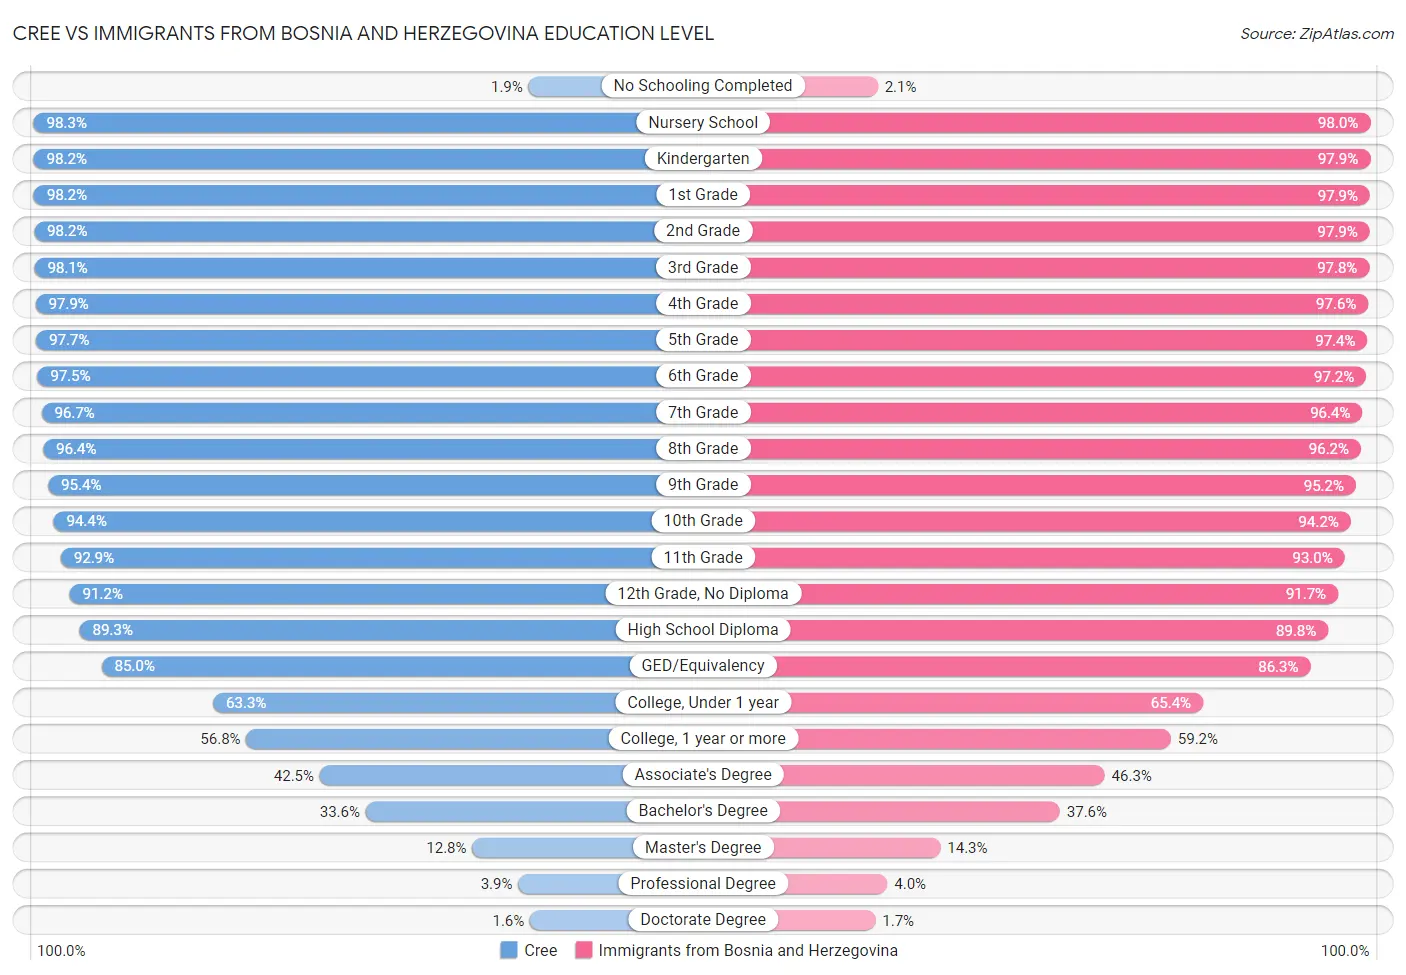 Cree vs Immigrants from Bosnia and Herzegovina Education Level